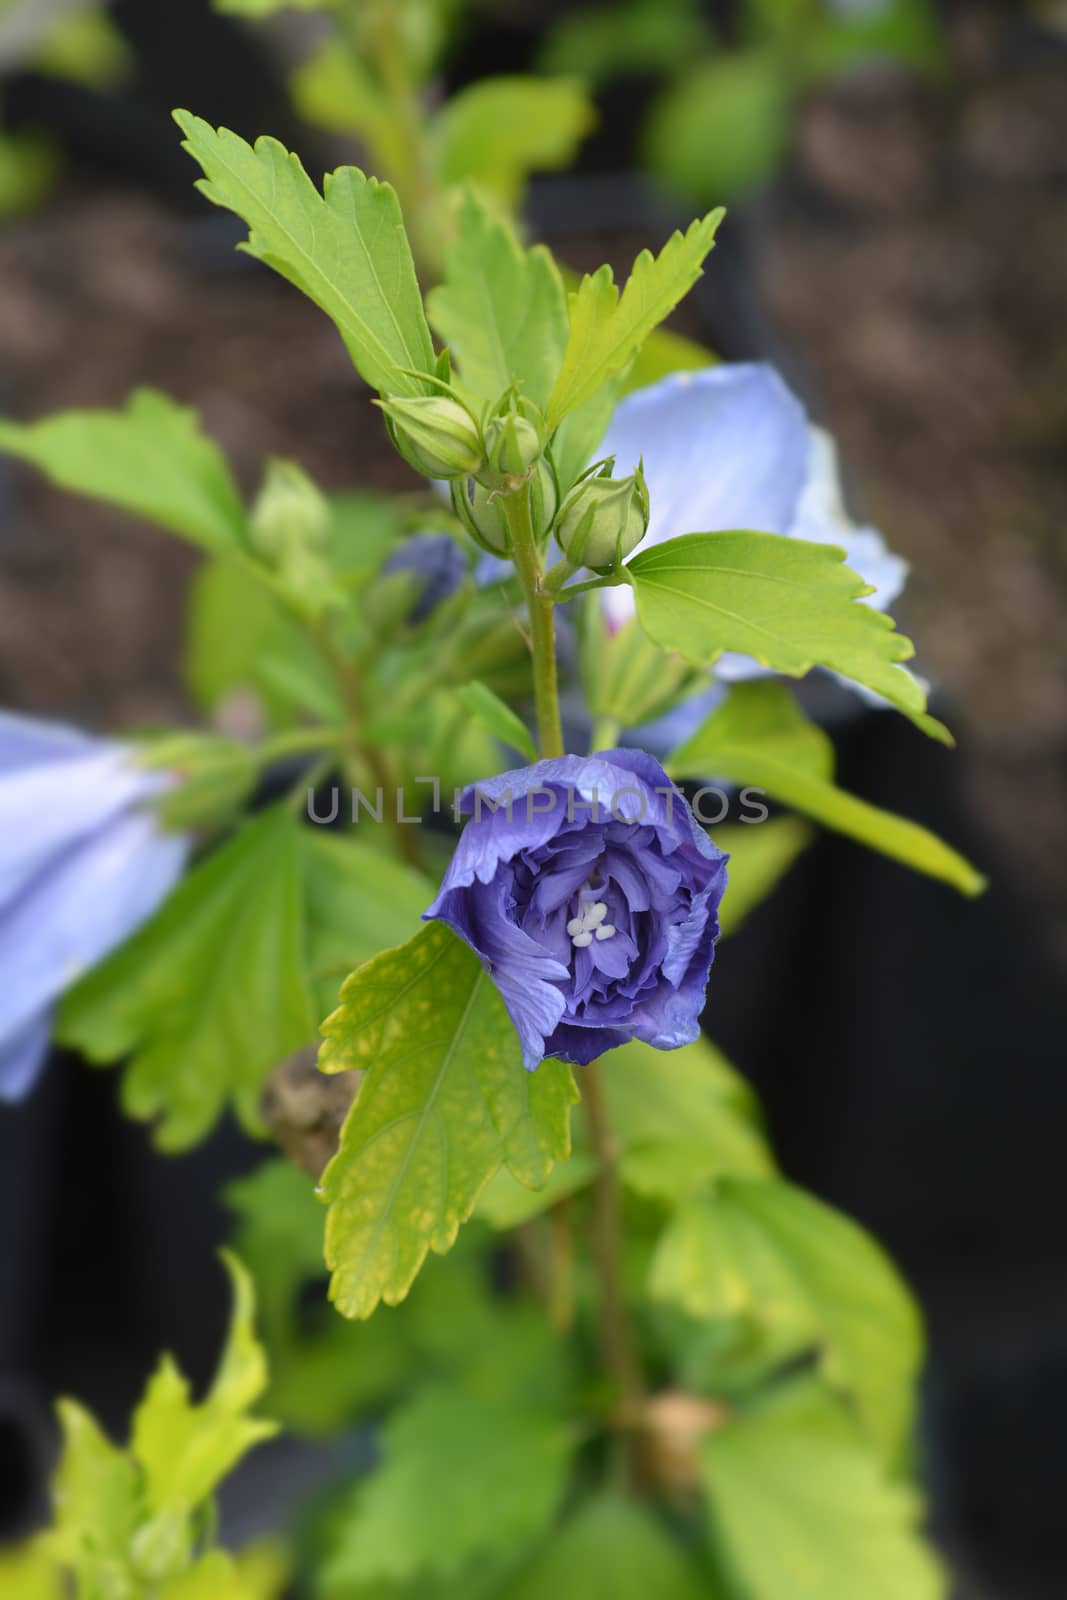 Rose Of Sharon Blue Chiffon - Latin name - Hibiscus syriacus Blue Chiffon